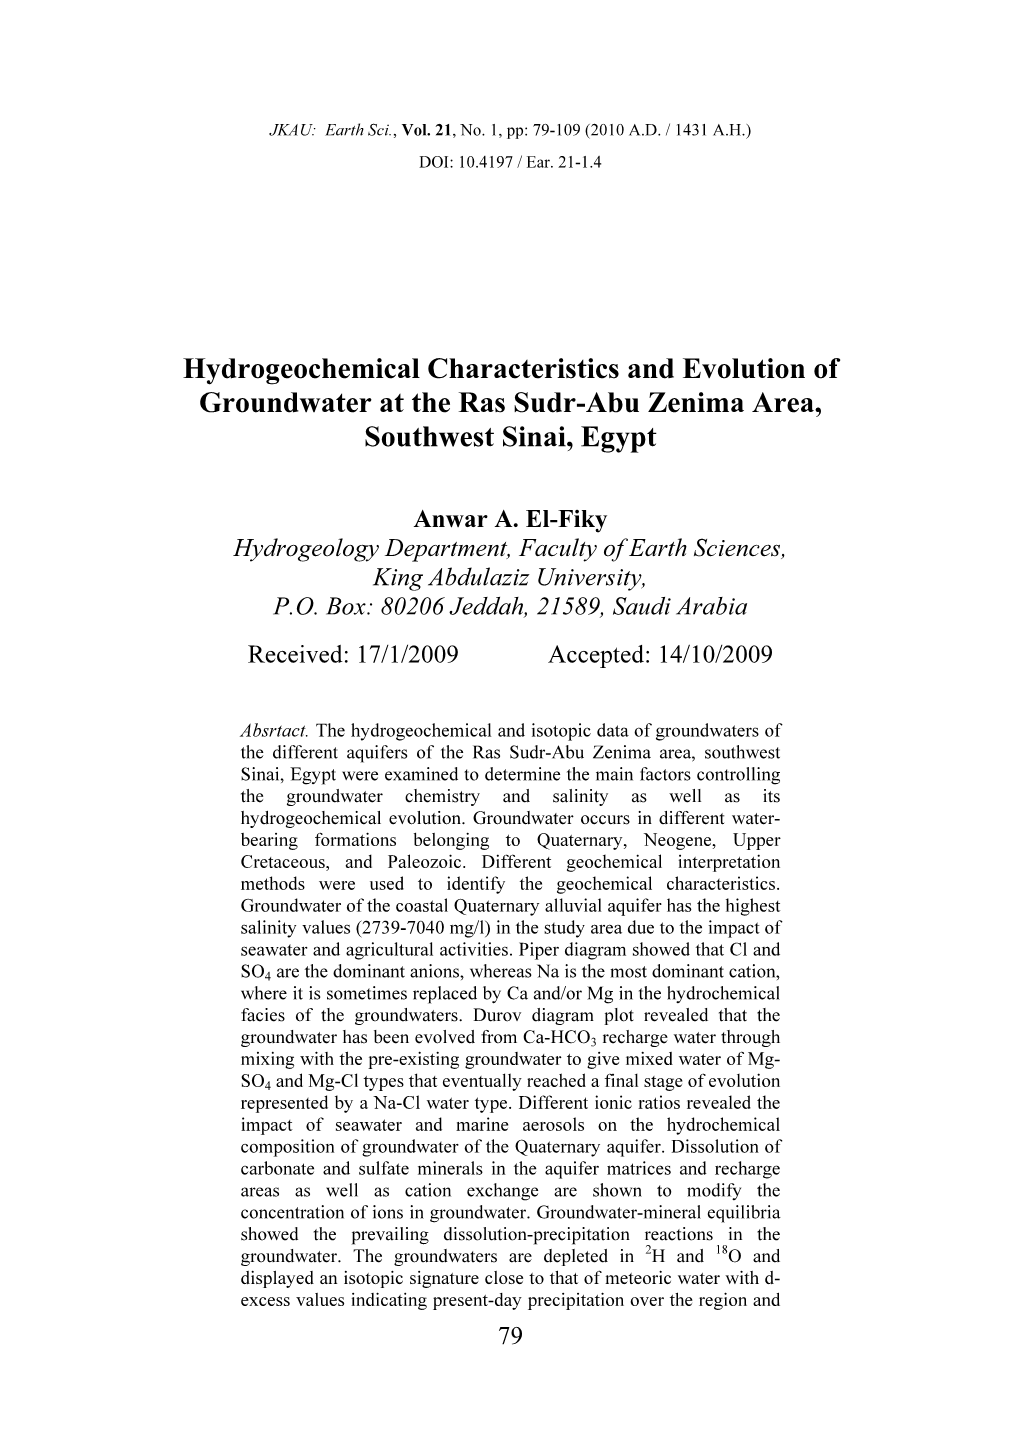 Hydrogeochemical Characteristics and Evolution of Groundwater at the Ras Sudr-Abu Zenima Area, Southwest Sinai, Egypt